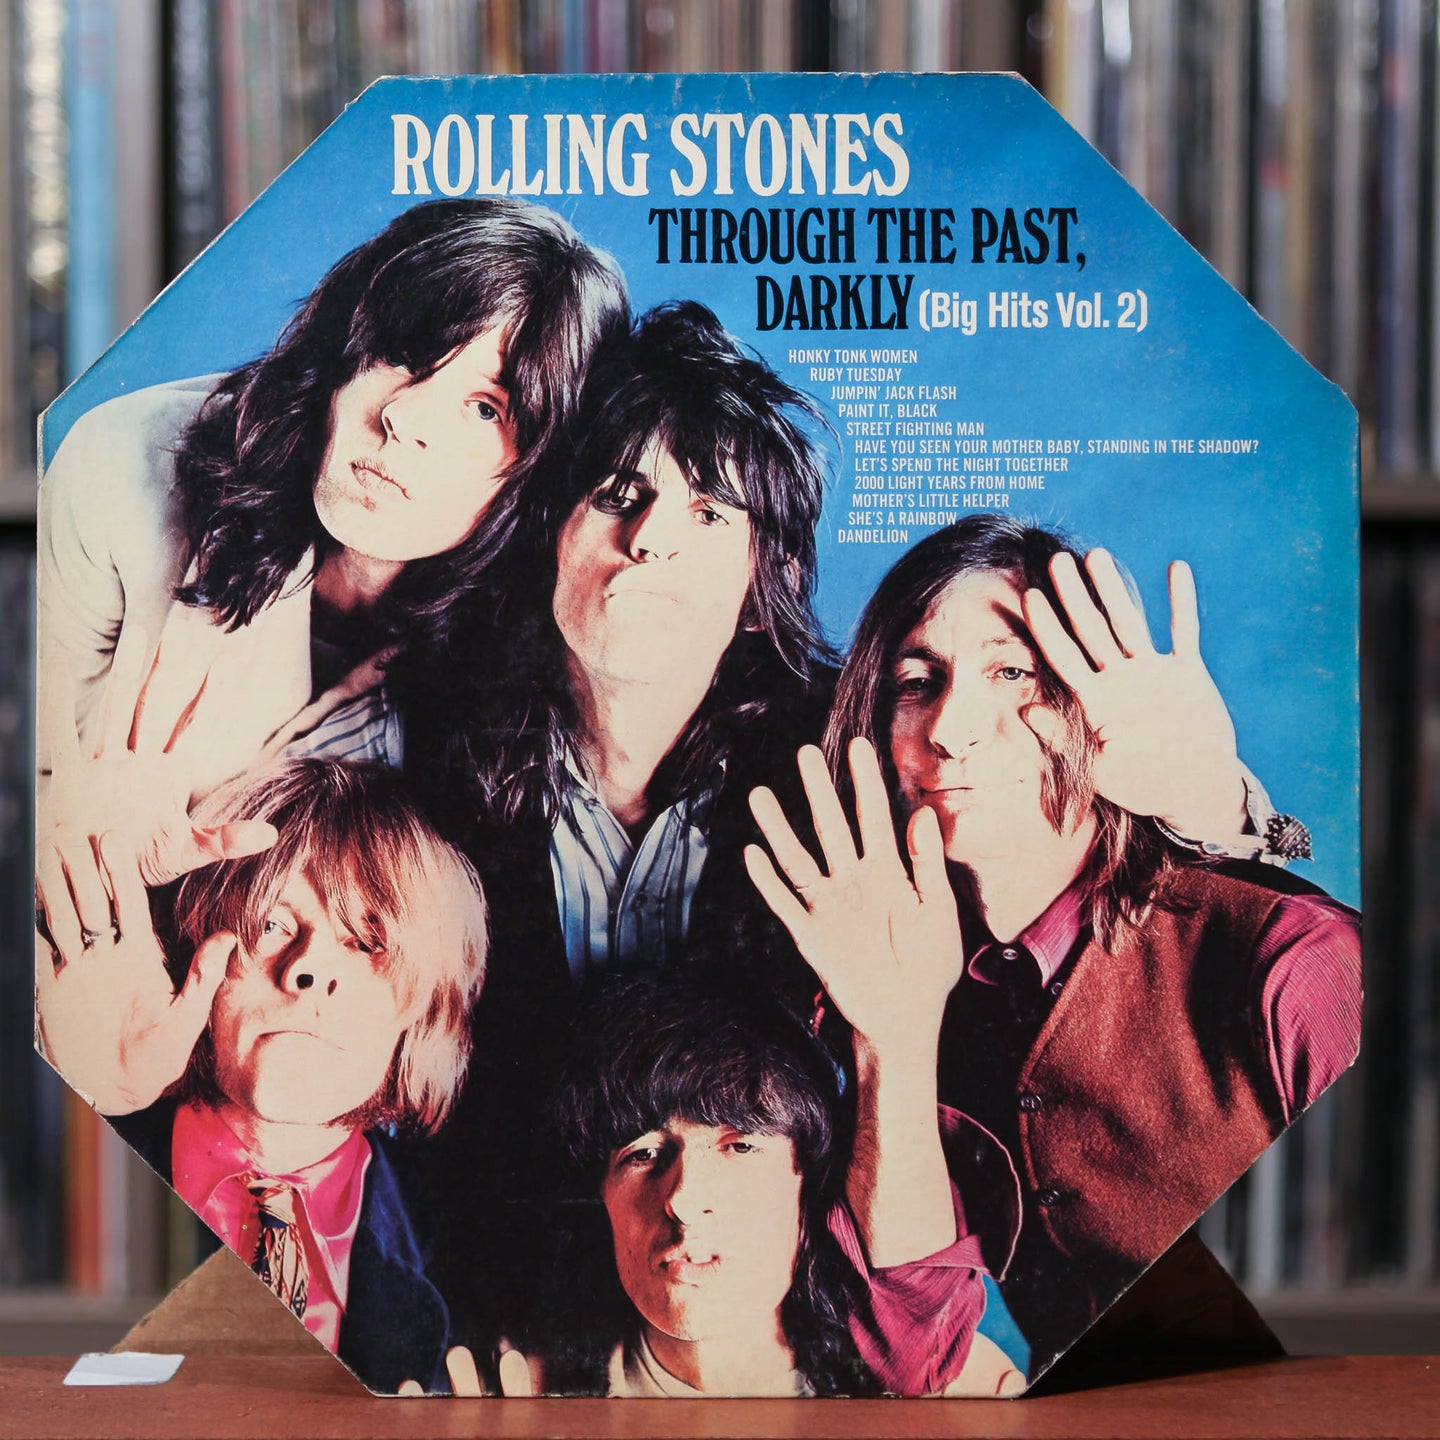 Rolling Stones - Through The Past, Darkly (Big Hits Vol. 2) - 1969 London, VG+/VG+